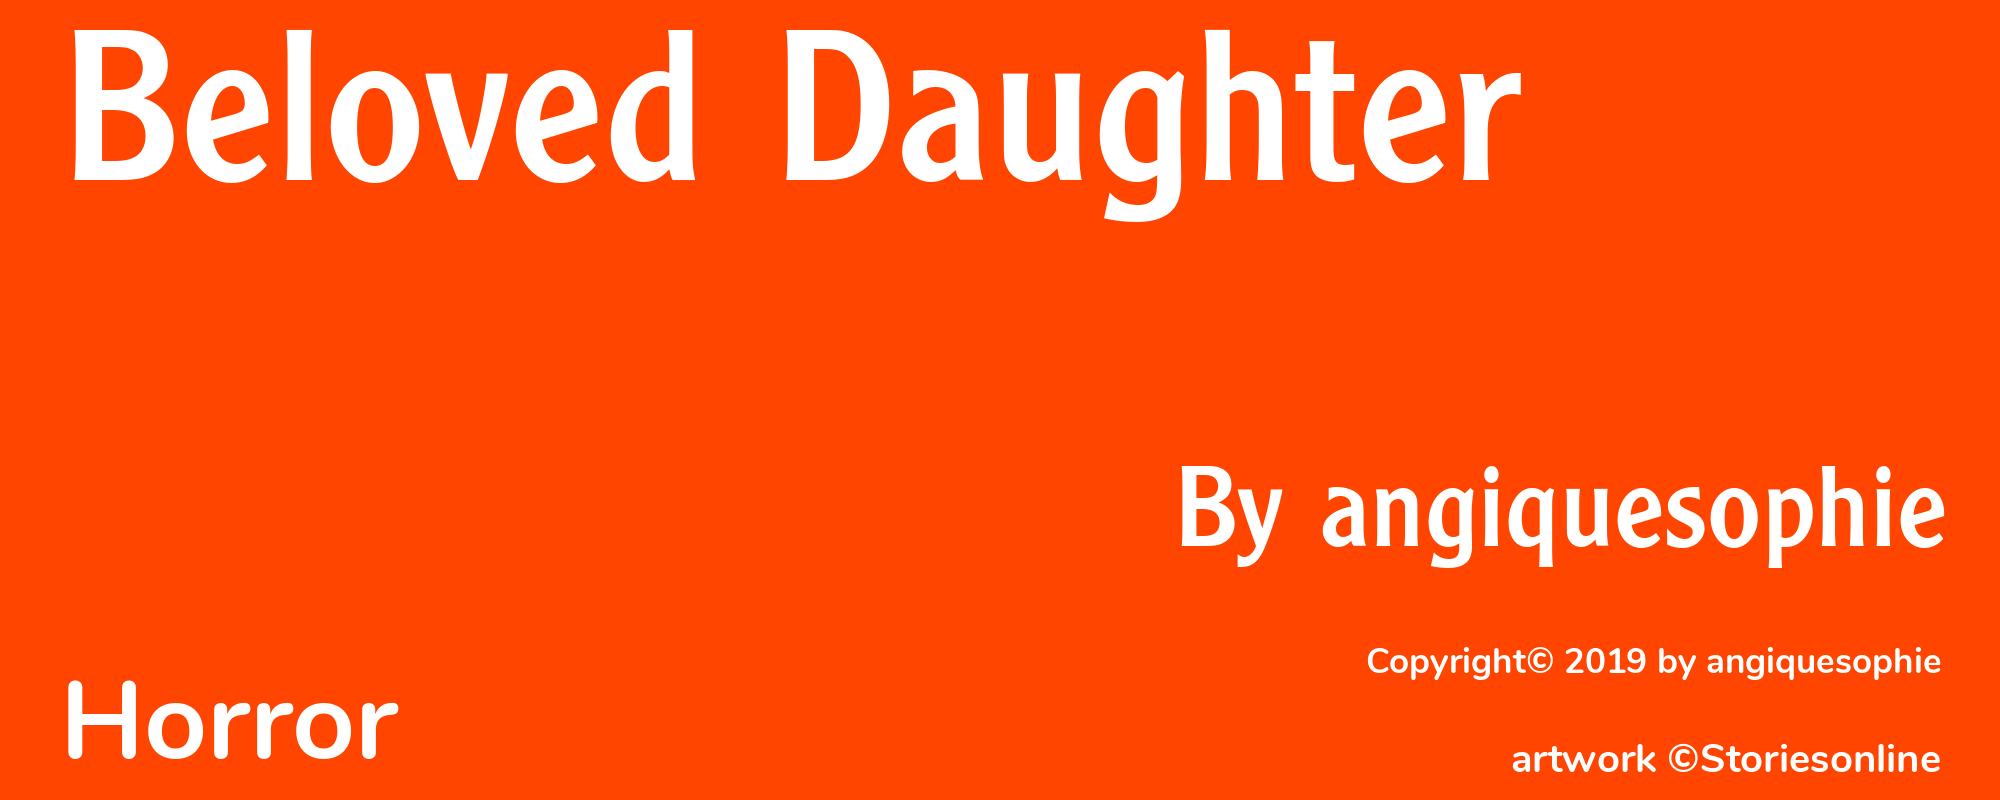 Beloved Daughter - Cover